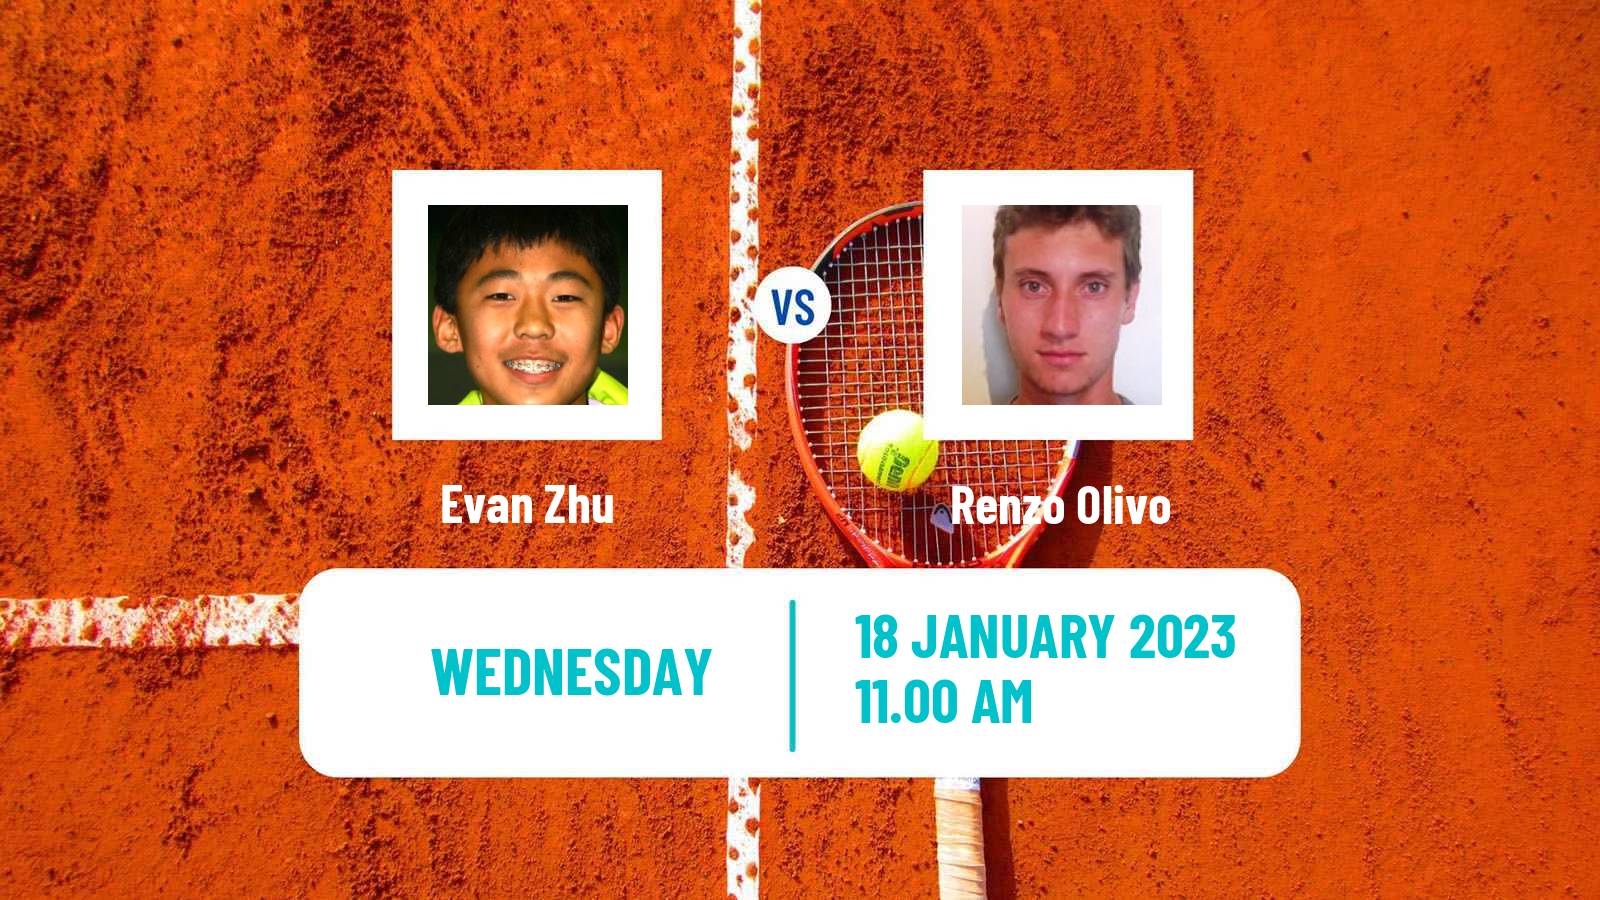 Tennis ATP Challenger Evan Zhu - Renzo Olivo